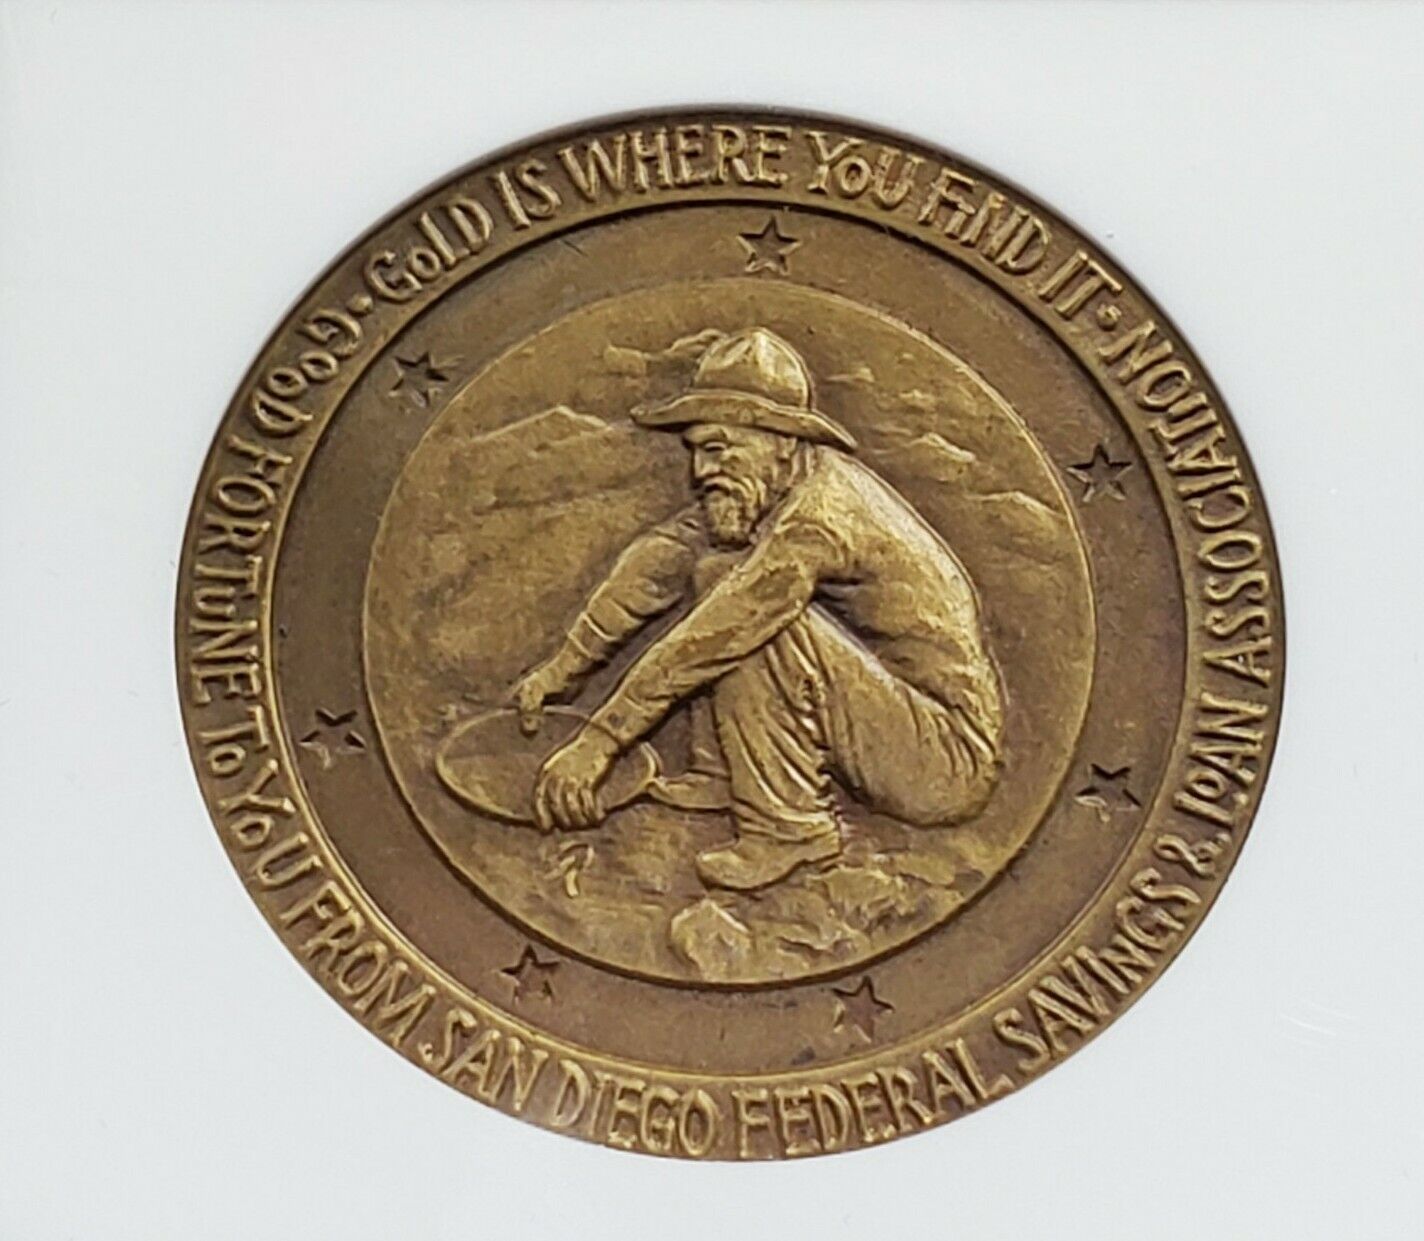 1955 San Diego Federal Savings & Loan Association Medal Gold Miner NGC MS65 Gem